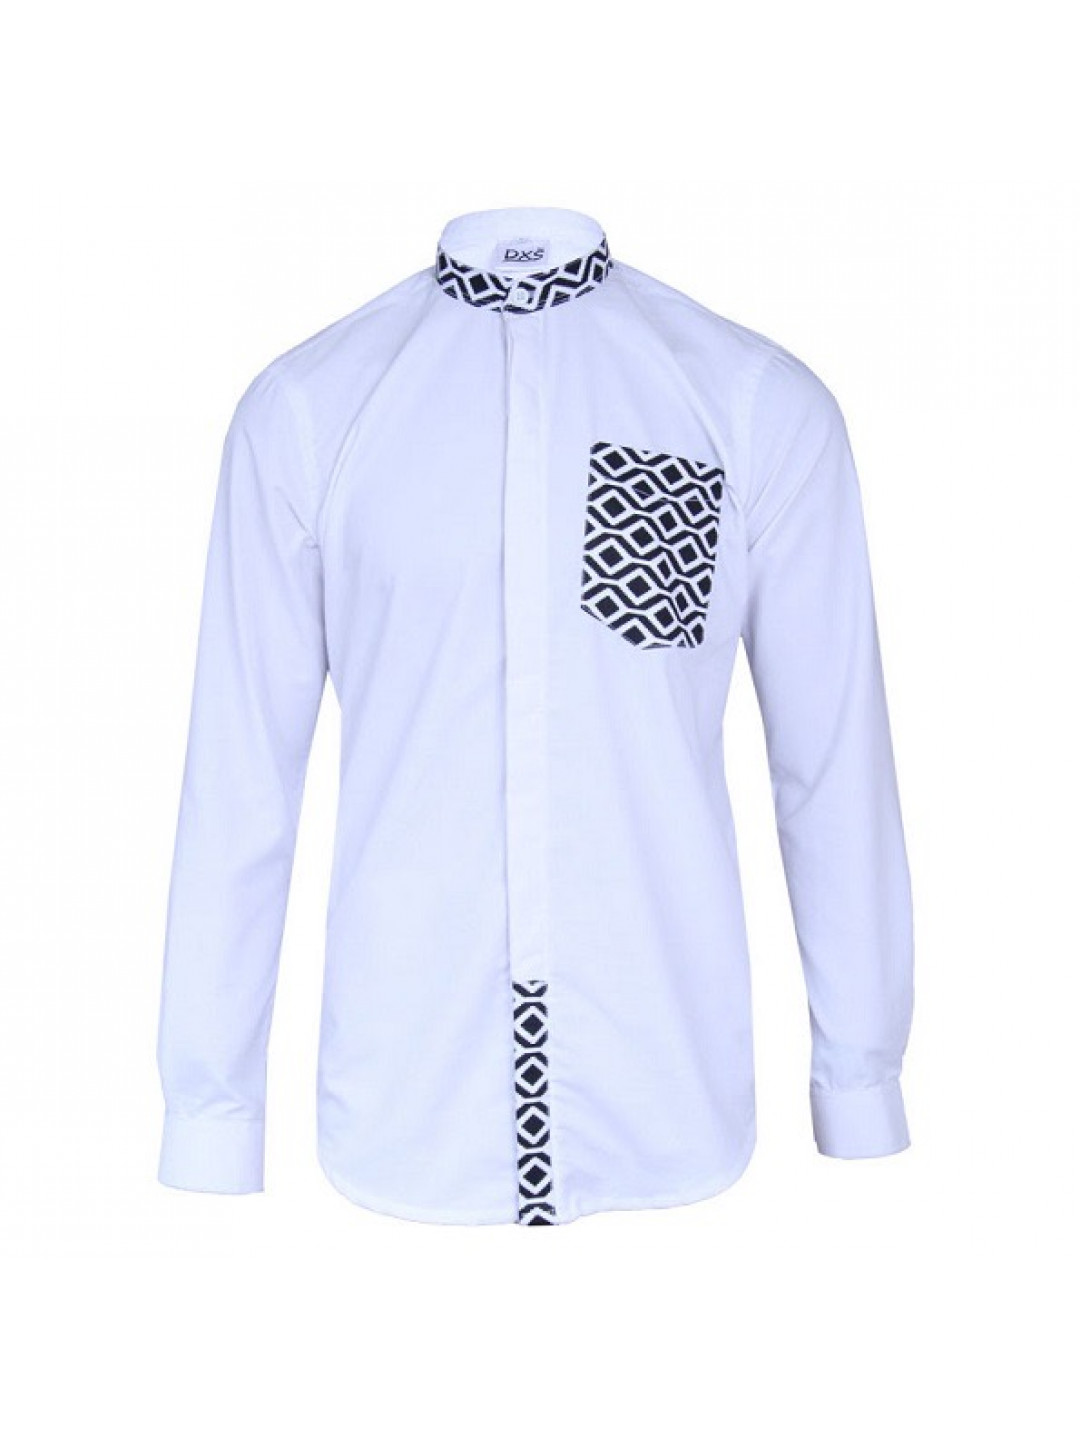 Premium Oxford LS Bishop neck shirt with Aztec Monochrome Pattern by DXS - White